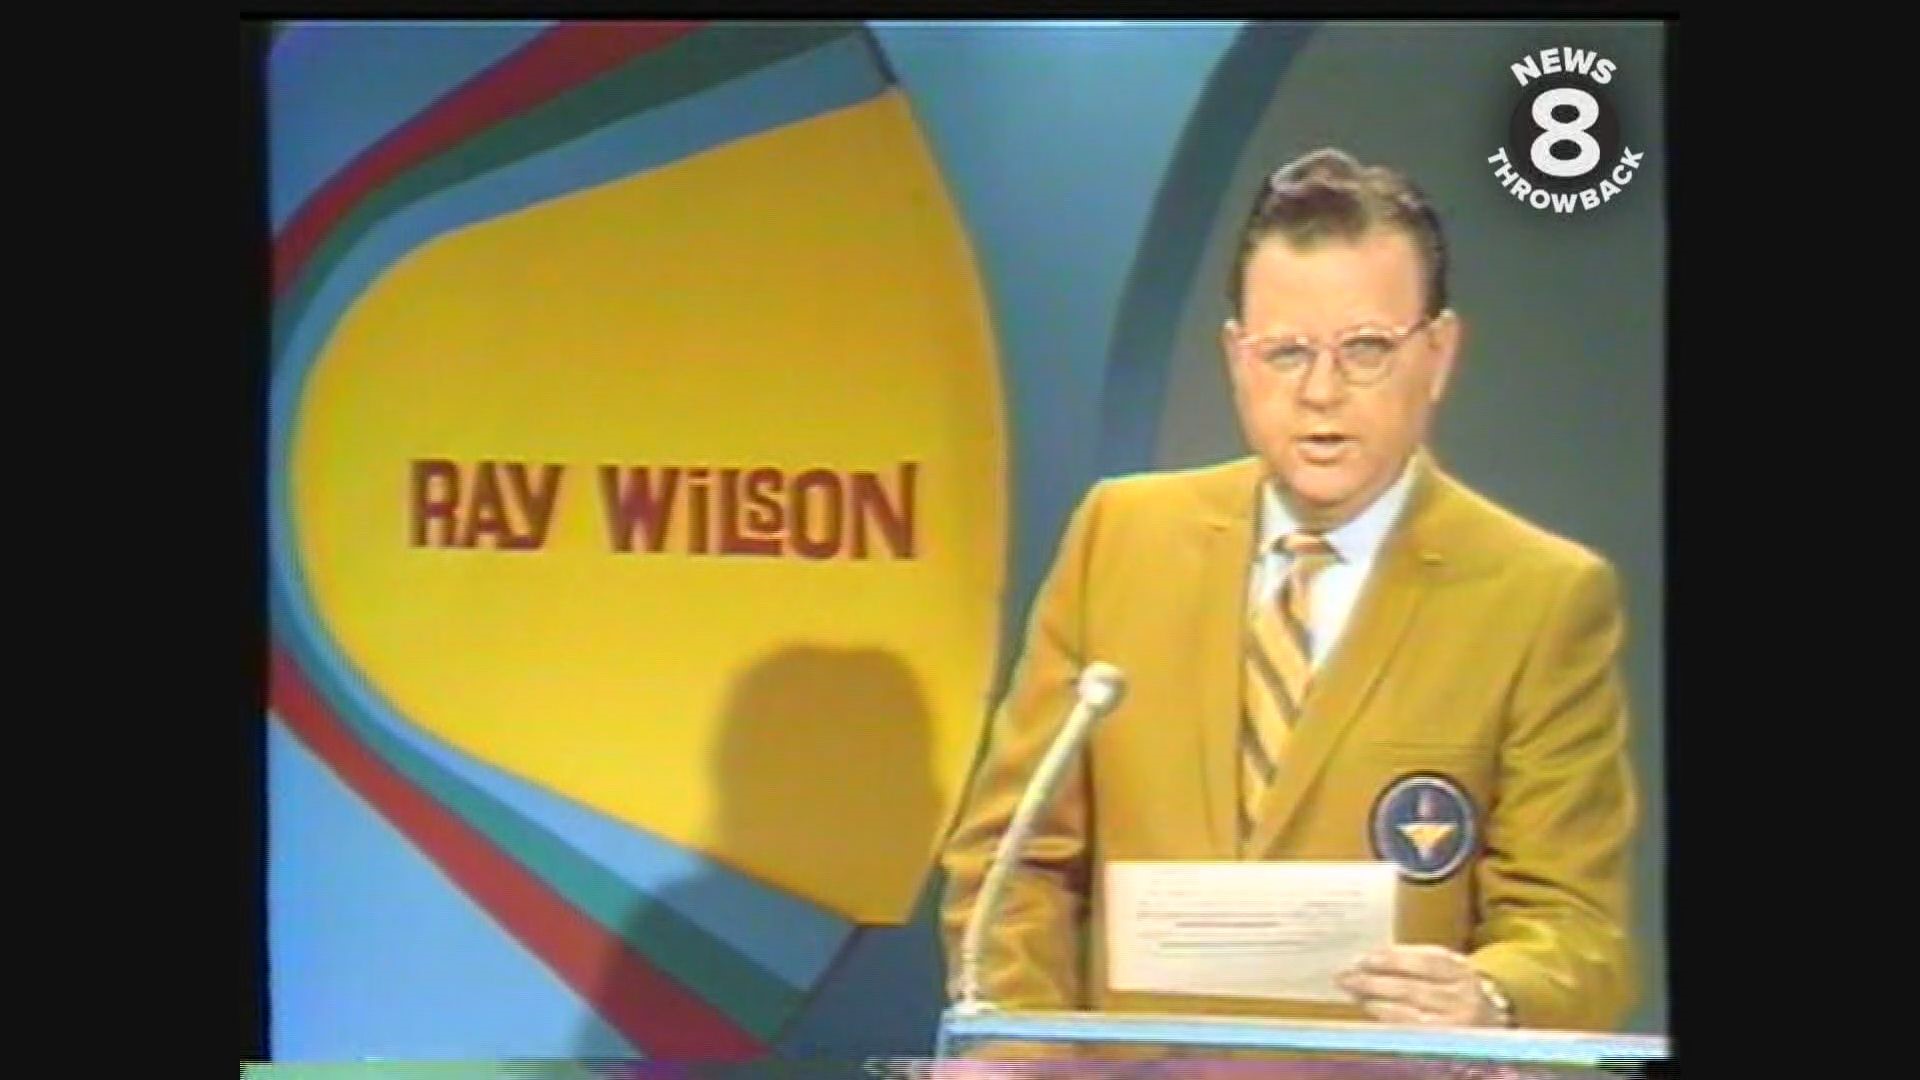 Memories of News 8 anchorman Ray Wilson